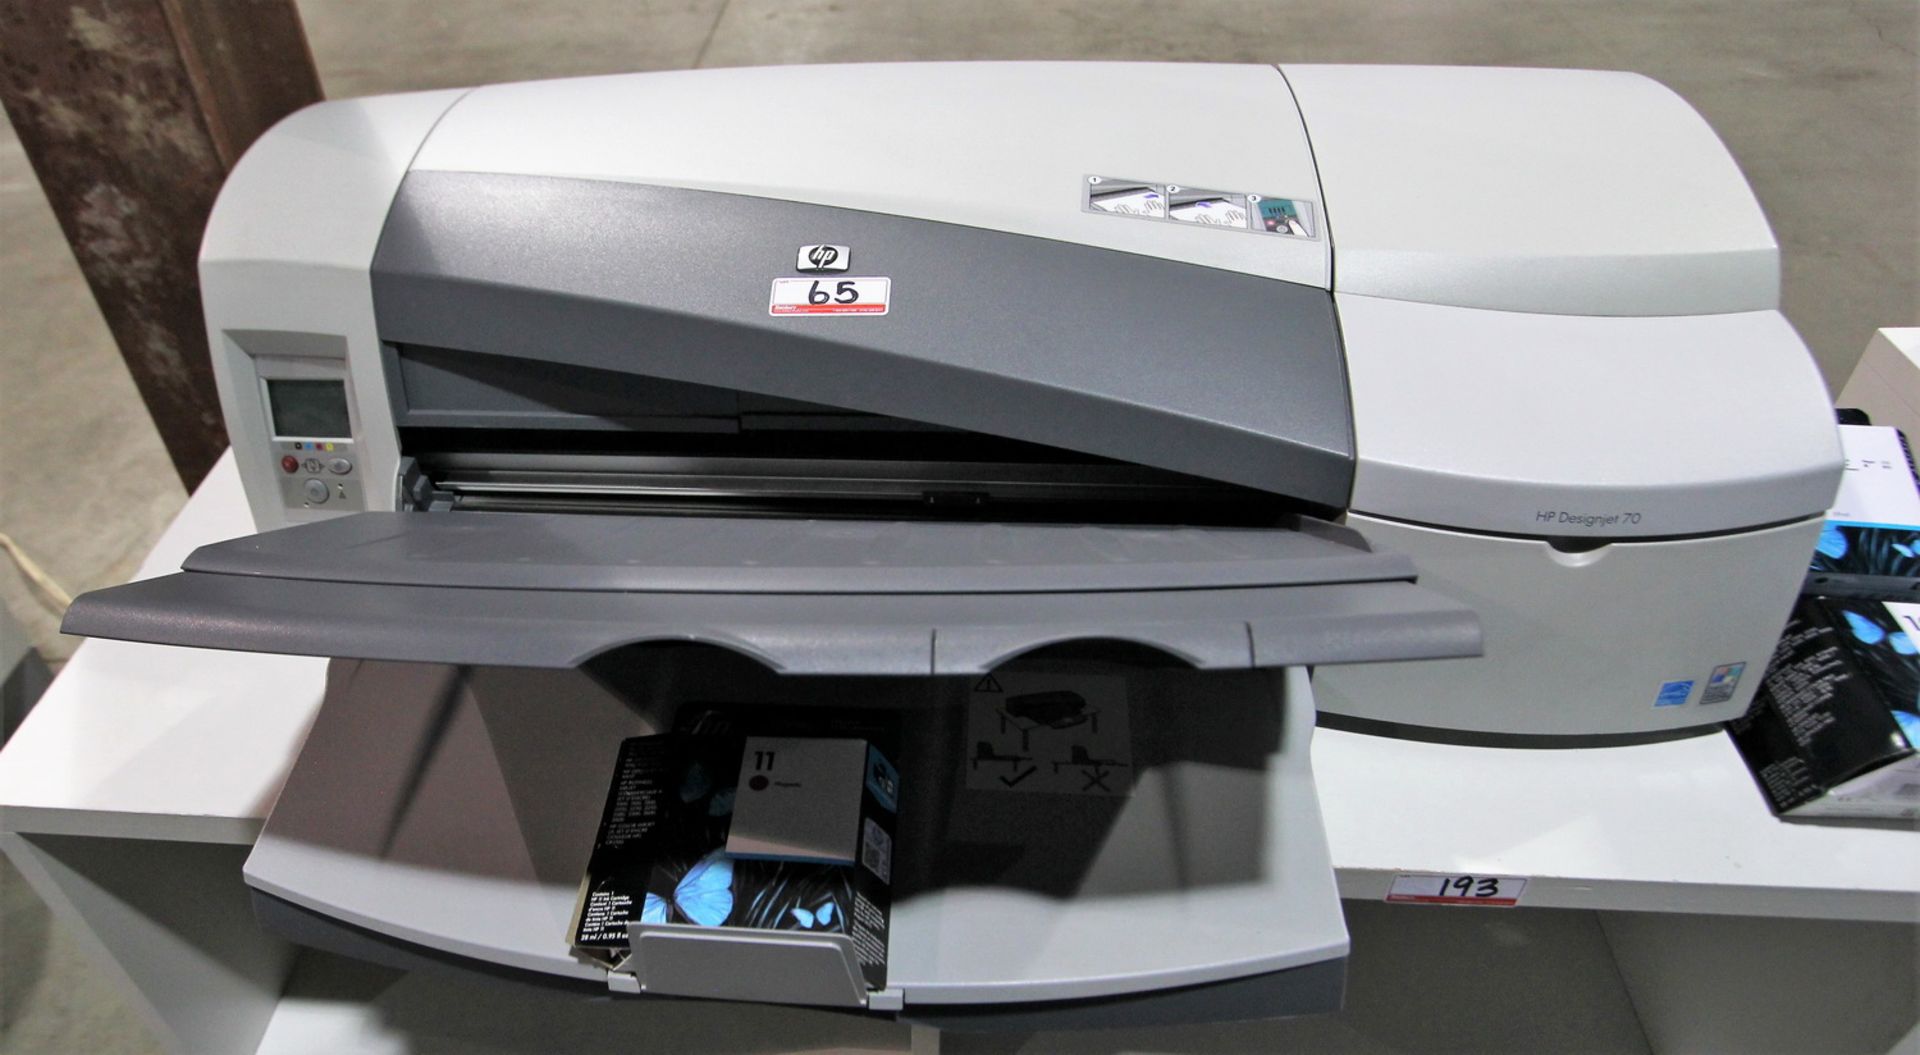 HP DESIGNJET 70 (Q6655A) WIDE FORMAT COLOR PRINTER W/ INK CARTRIDGES